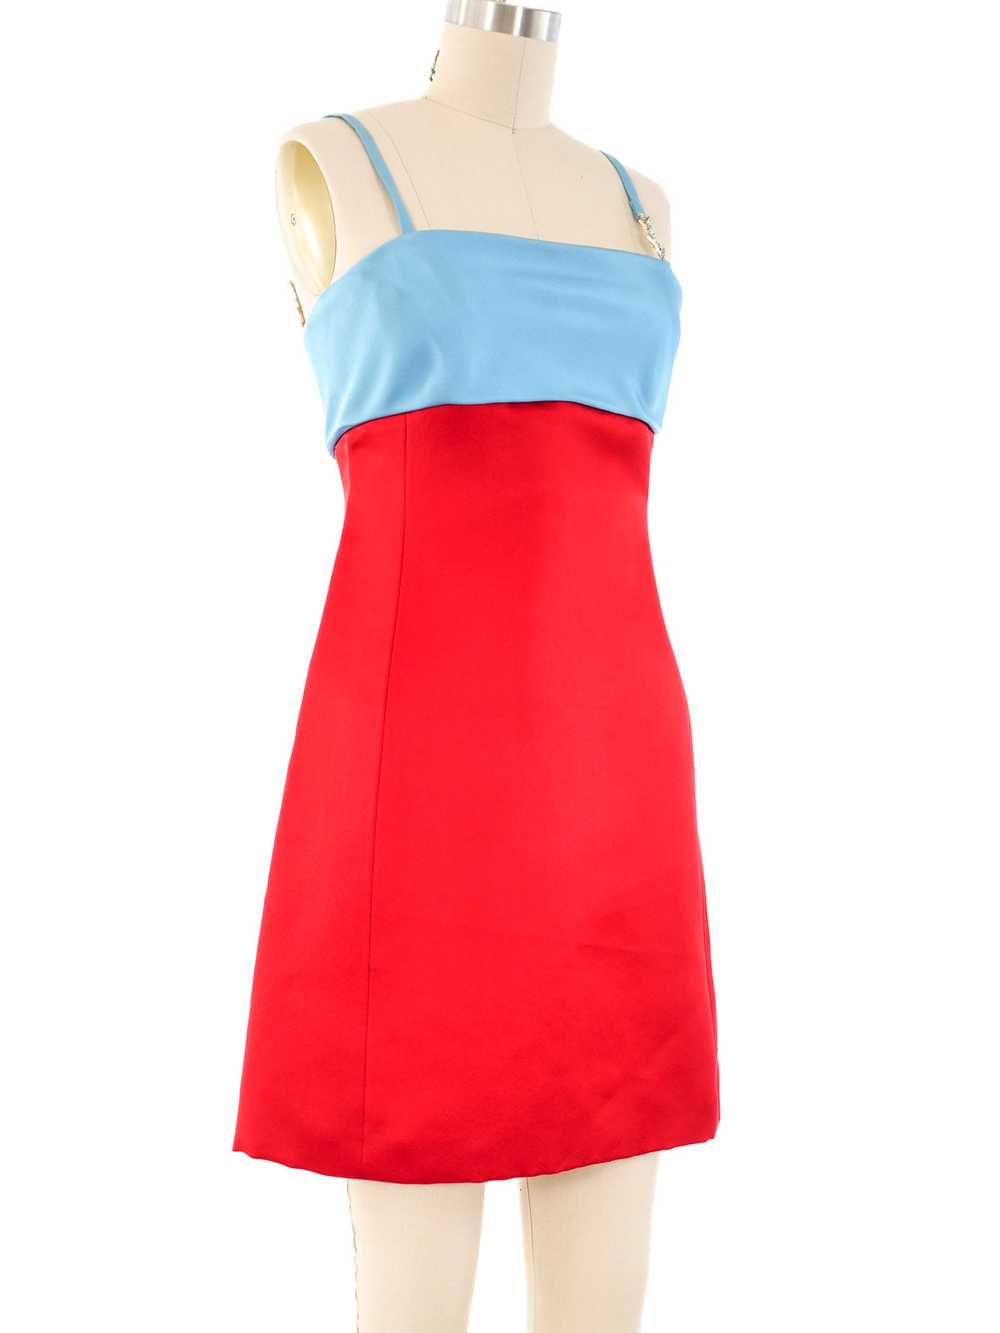 Gianni Versace Colorblock Satin Mini Dress - image 3